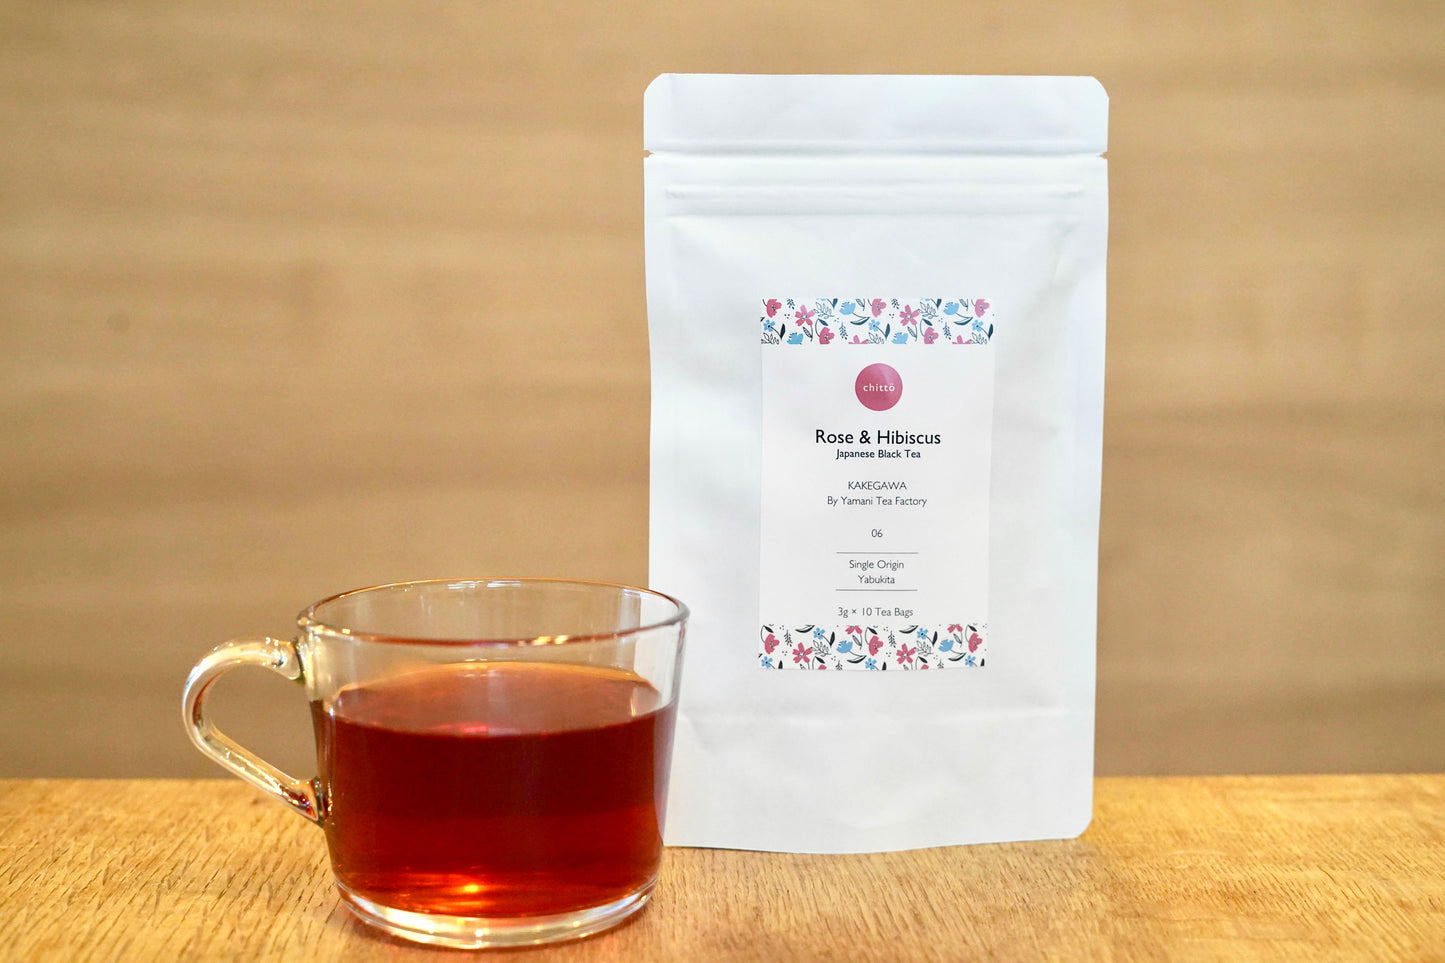 06 ROSE &amp; HIBISCUS [Japanese Black Tea Flavored Tea Rose &amp; Hibiscus] Tea Bag